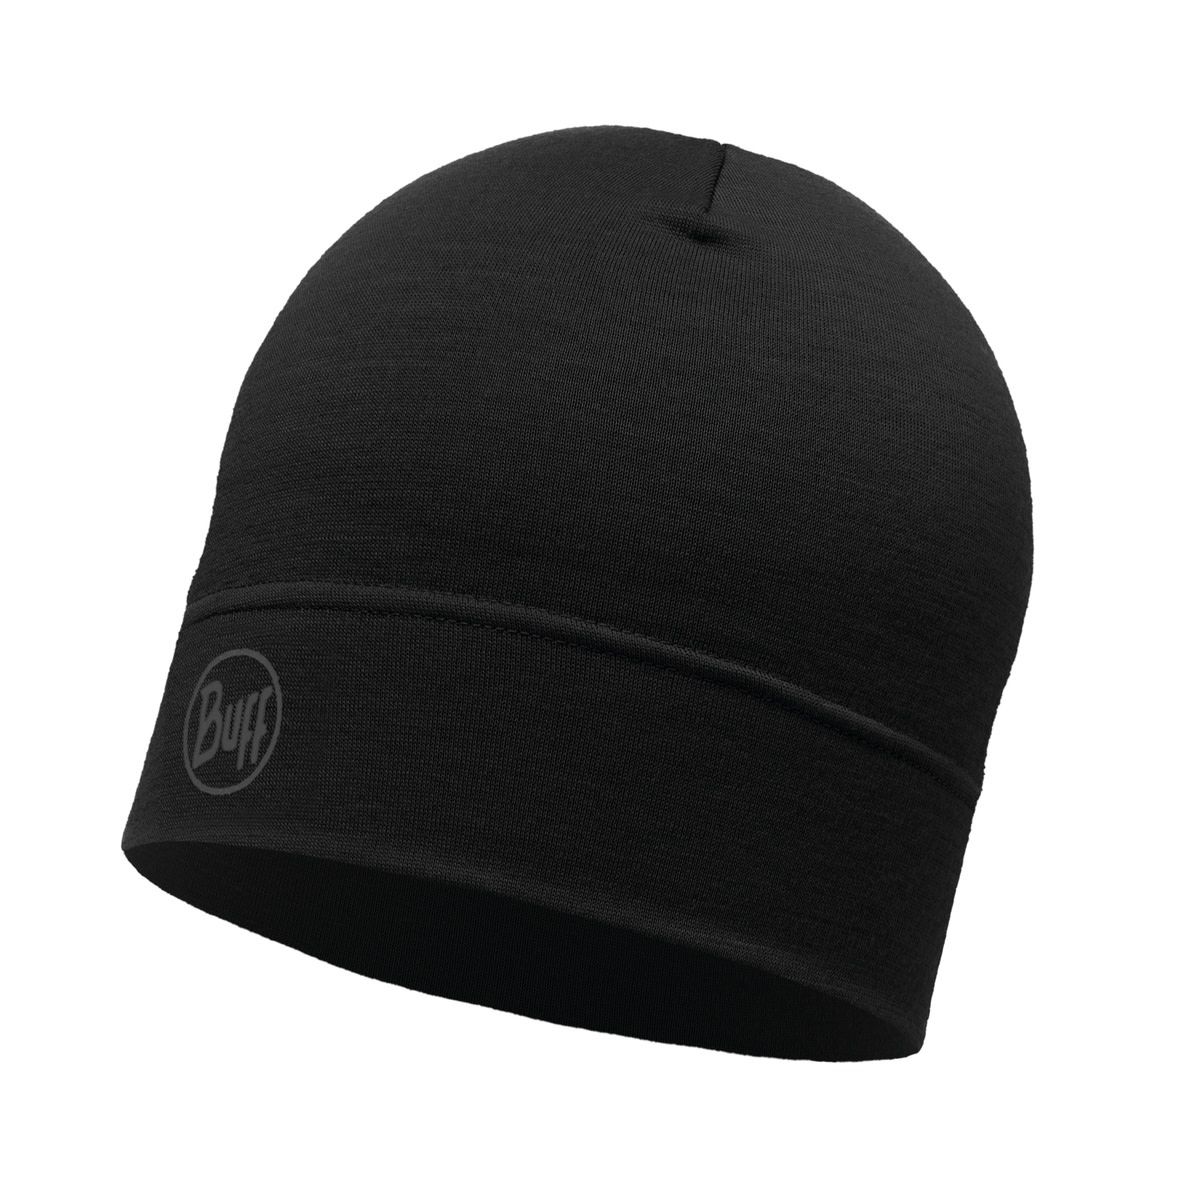 Lightweight Merino Wool Hat Solid Black